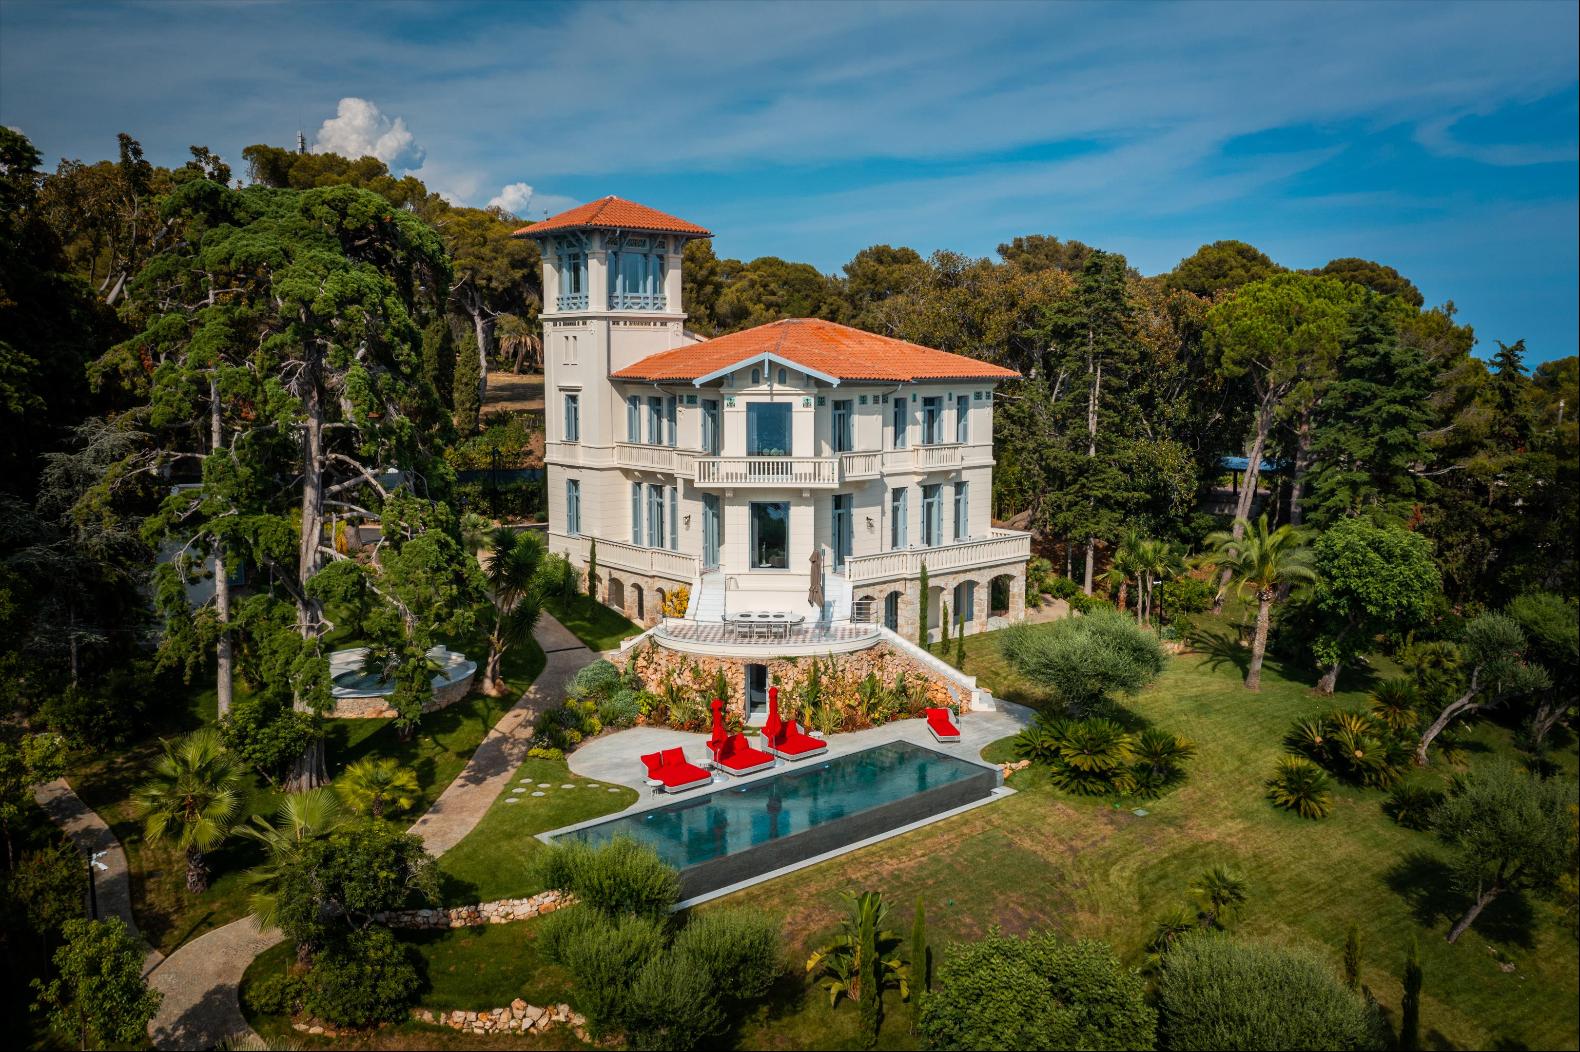 Splendid waterfront property in a private domain in Roquebrune-Cap-Martin